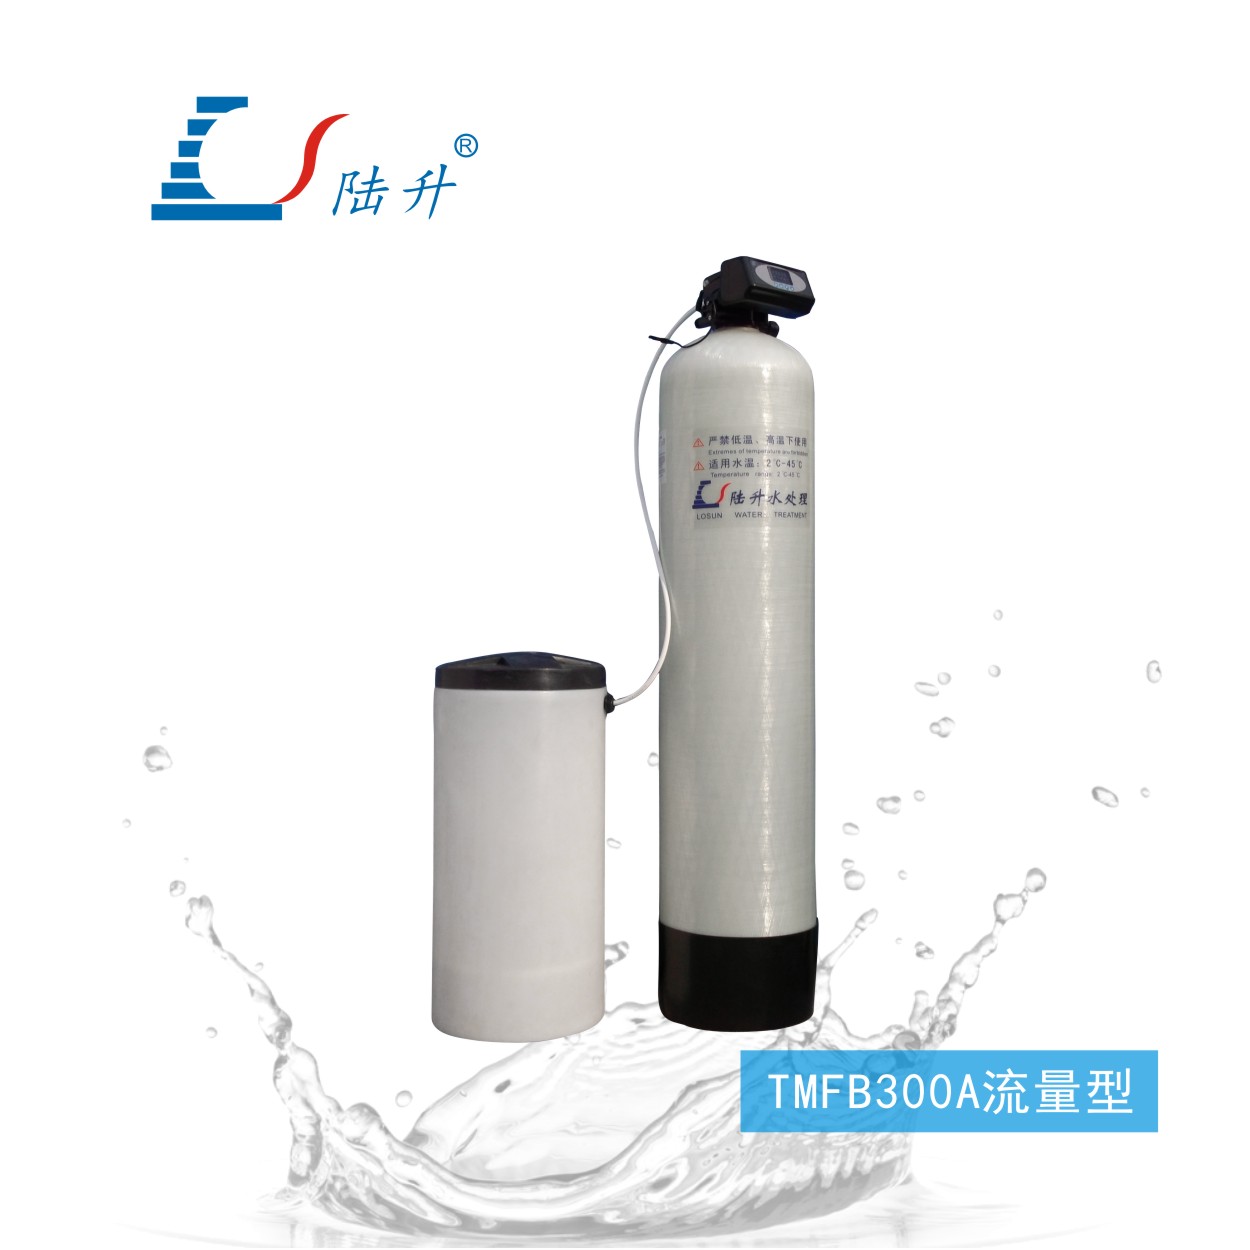 TMFB300A流量型软化水设备